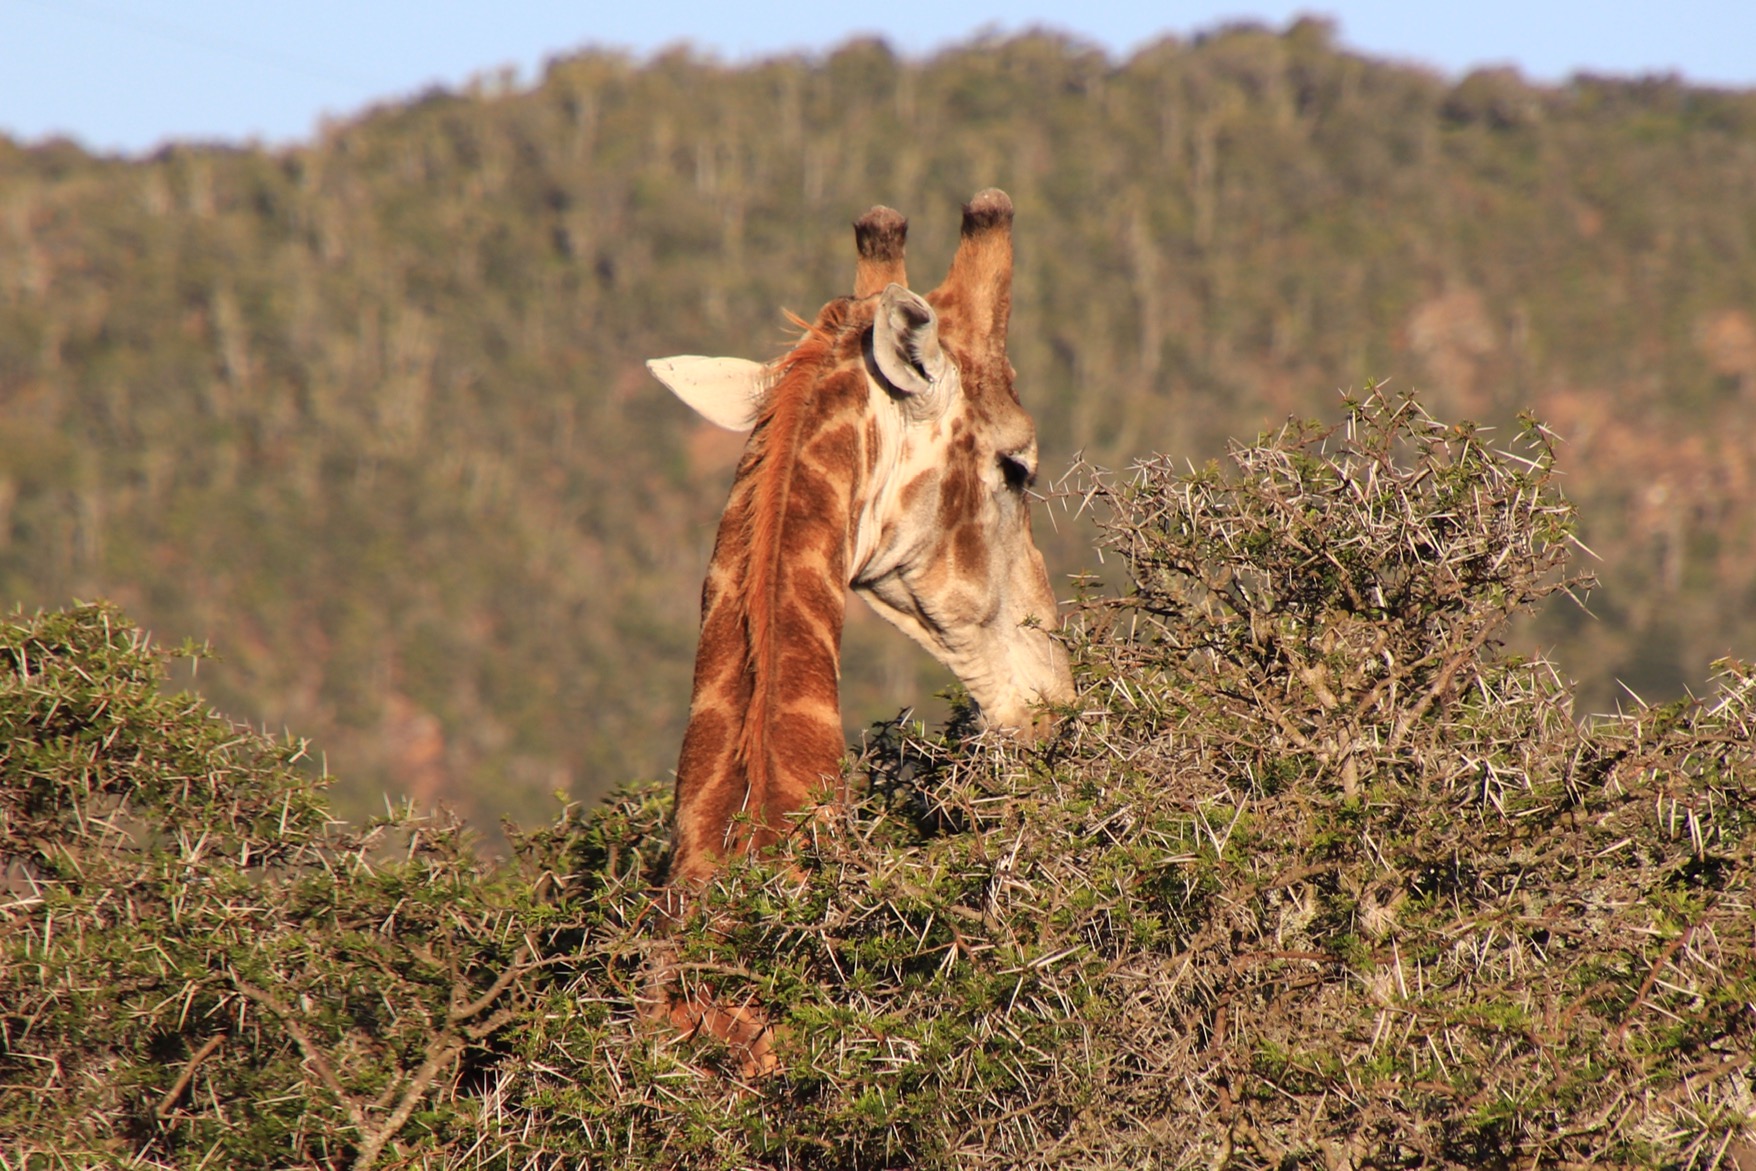 South Africa Malaria-Free Safari Giraffe